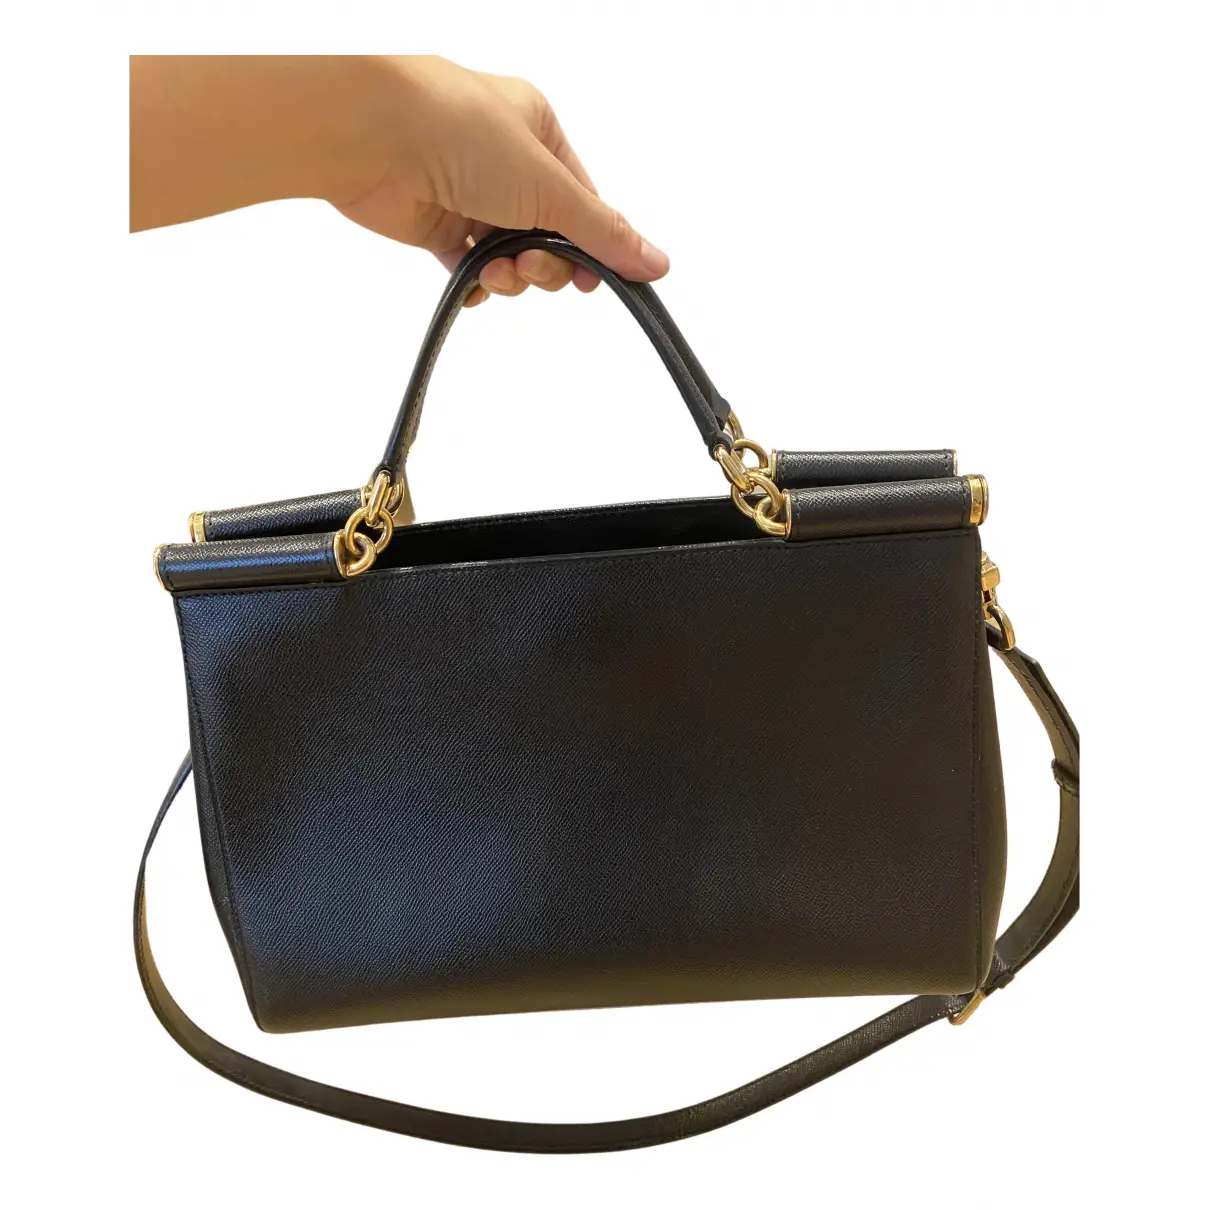 Buy Dolce & Gabbana Sicily leather crossbody bag online